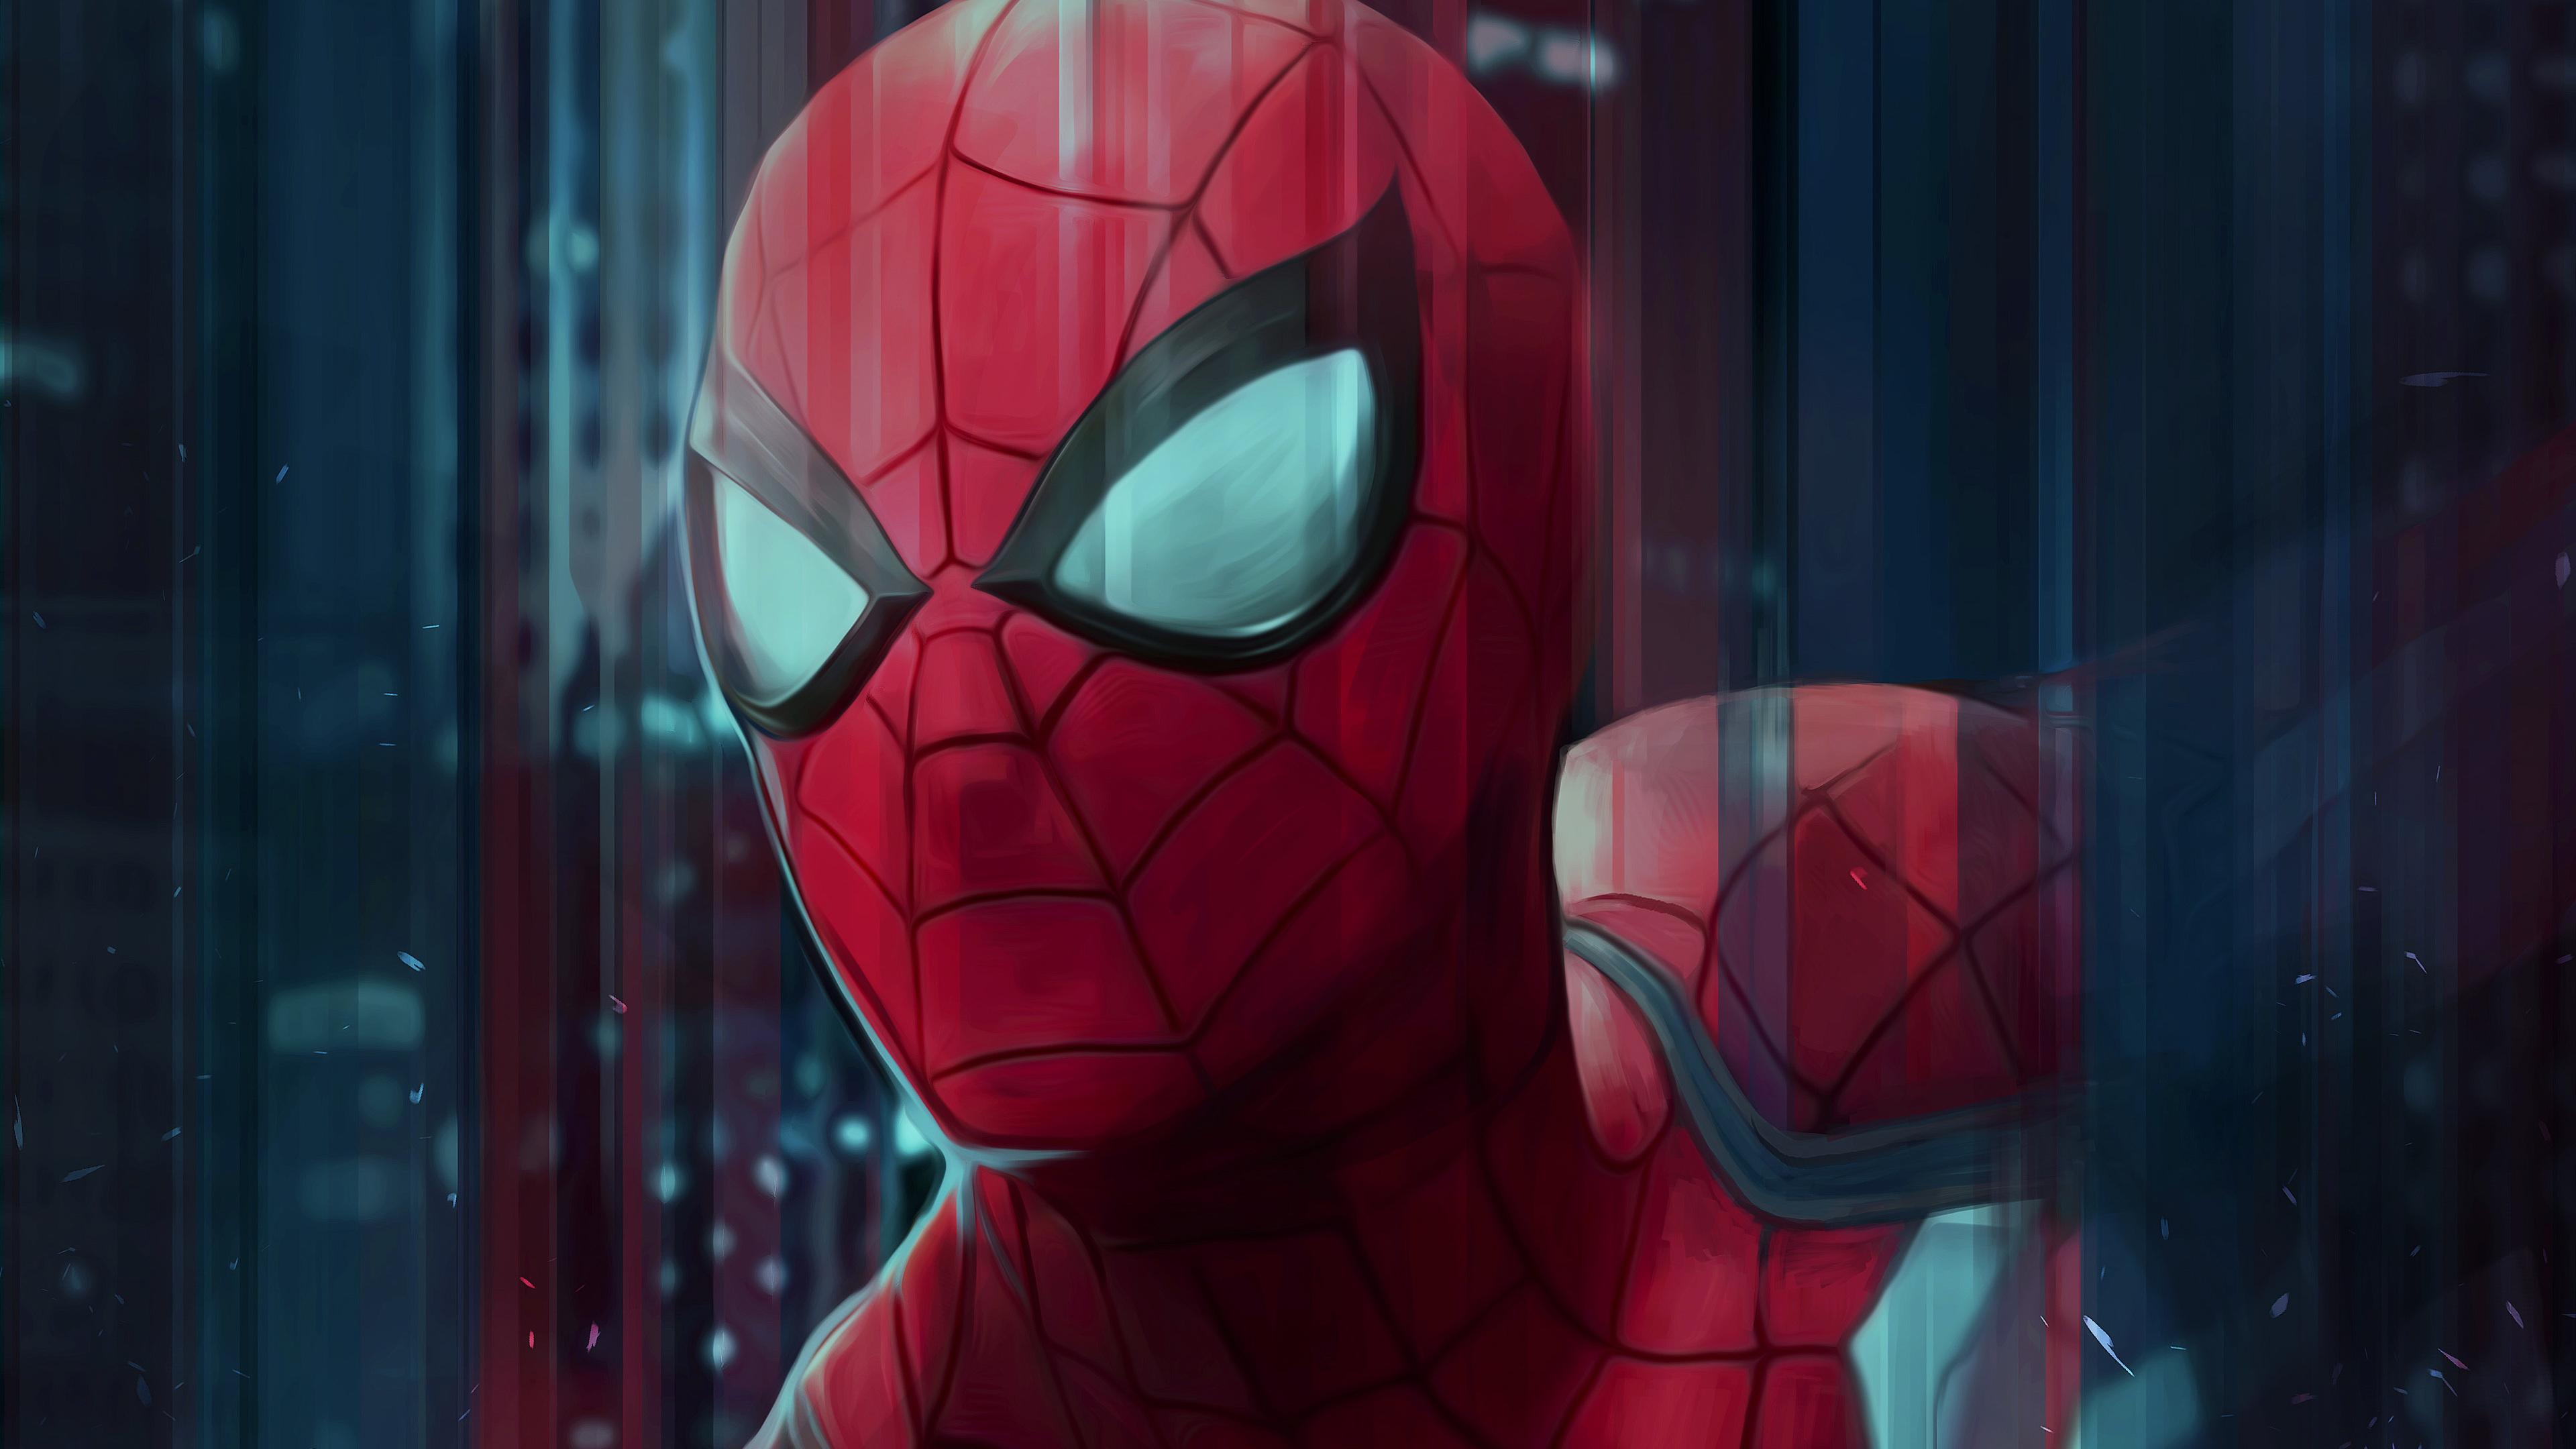 Spiderman Digital Art Wallpapers